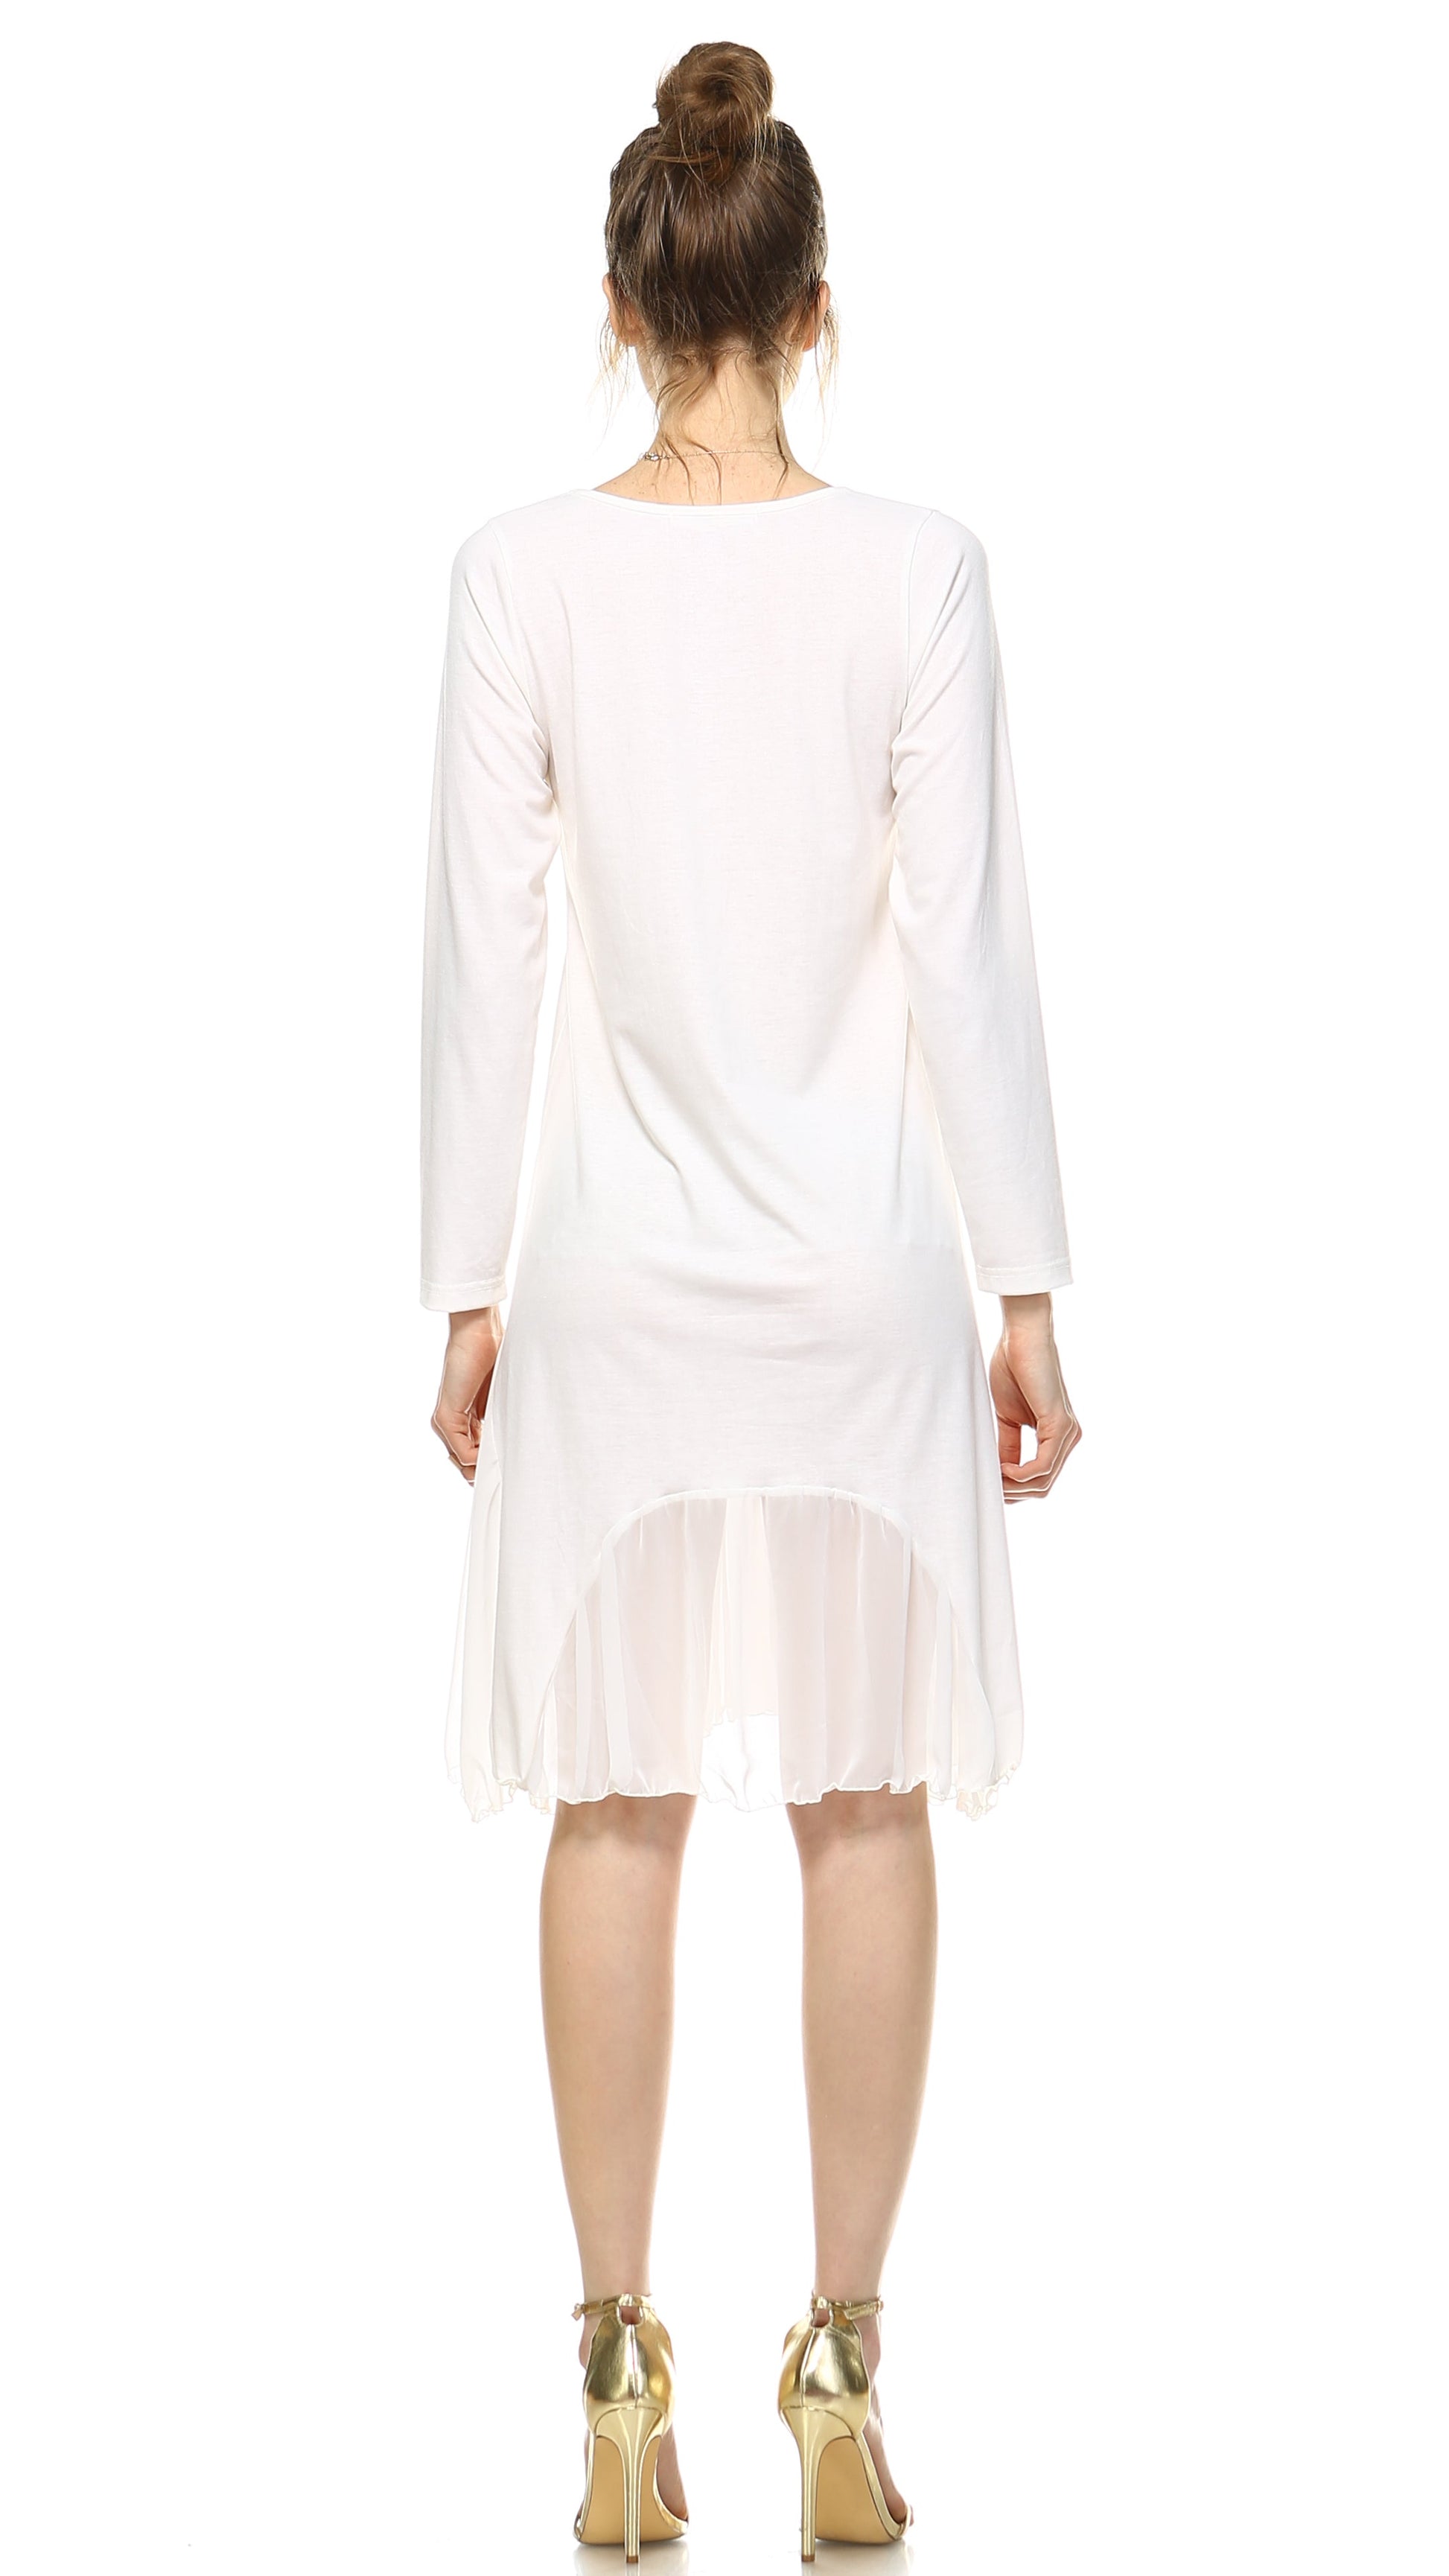 Bottom Scooped Long Sleeve Tunic Dress - Shop Lev